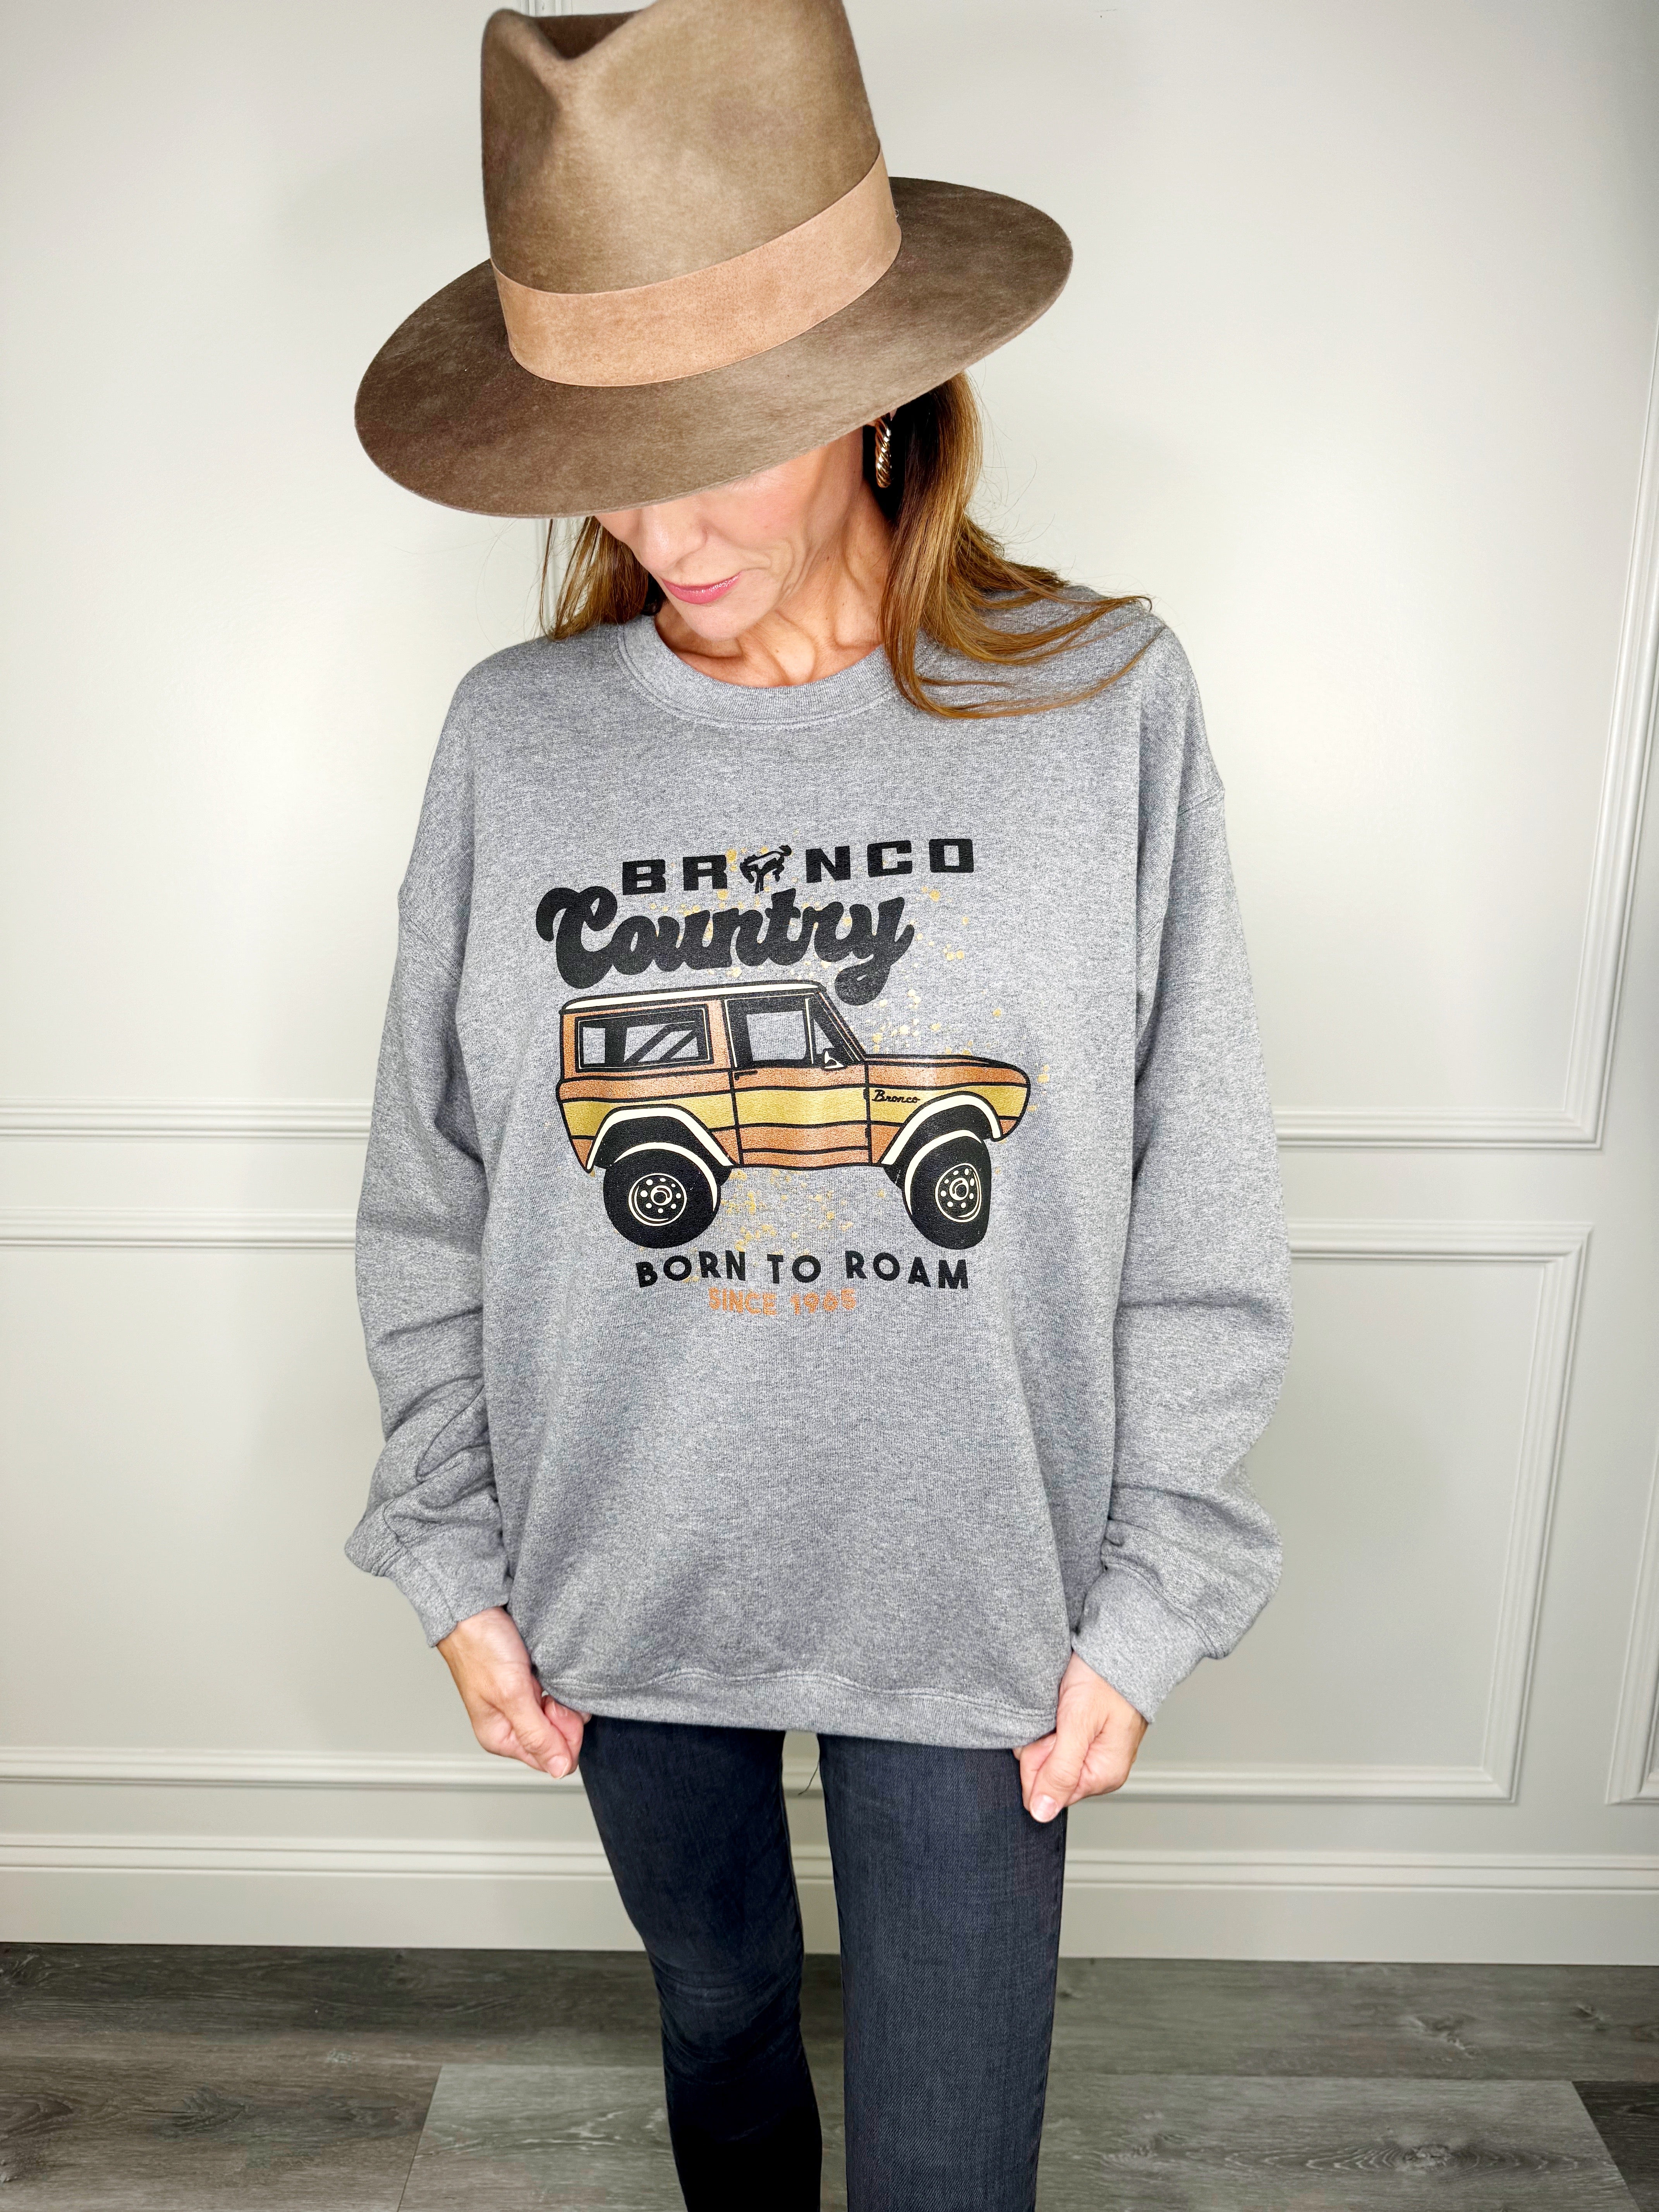 Bronco Country Grey Sweatshirt